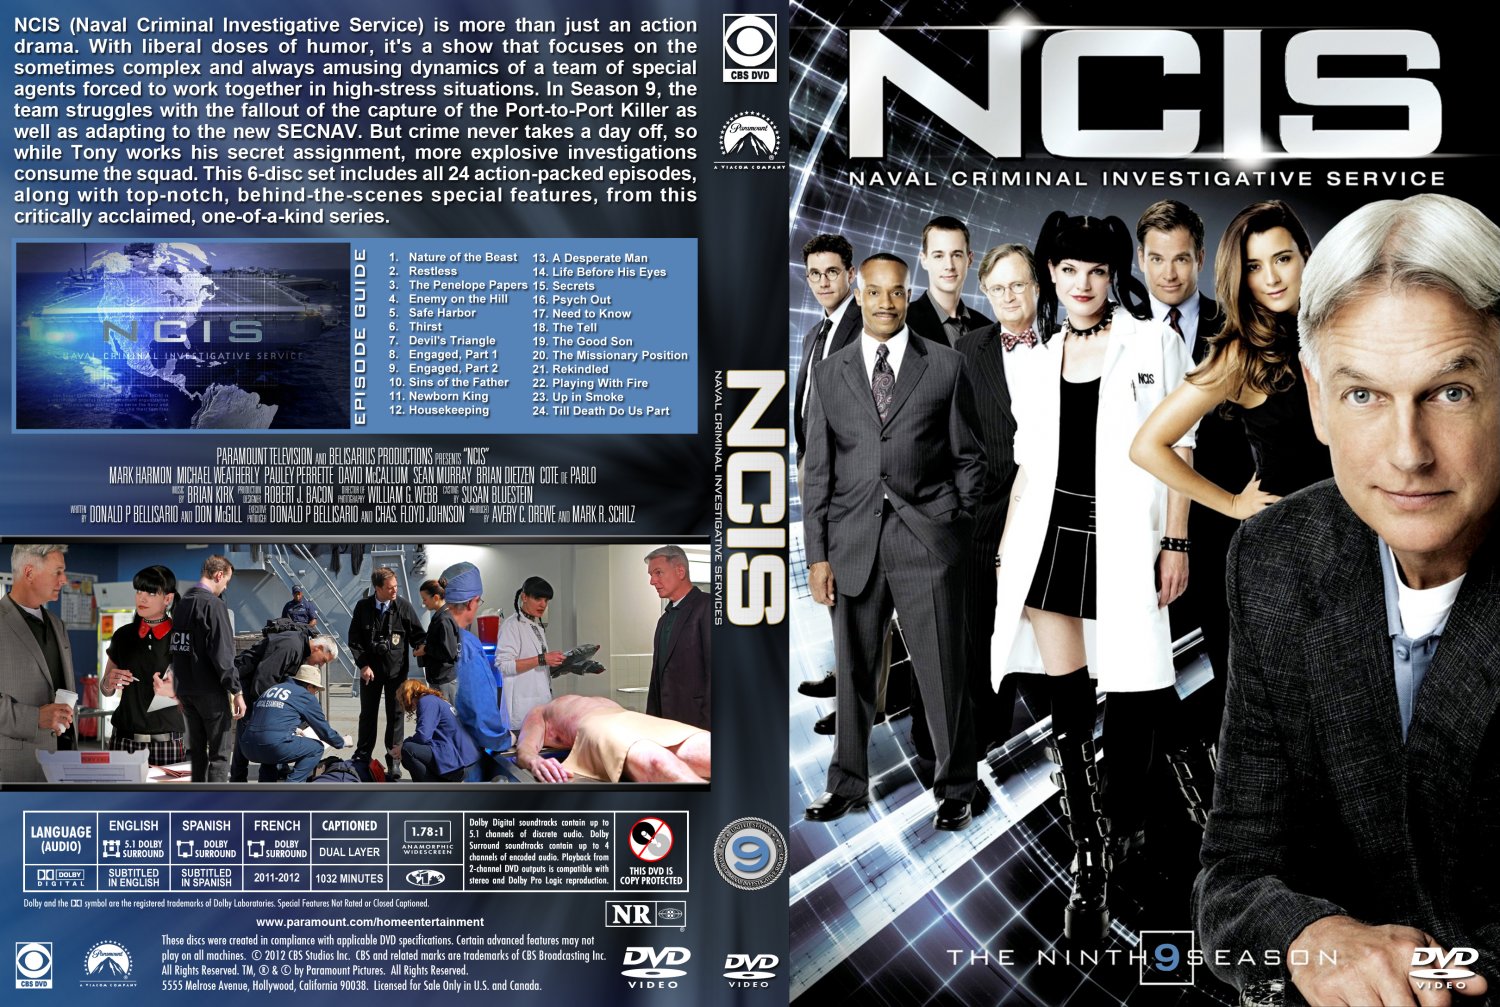 NCIS - Season 9